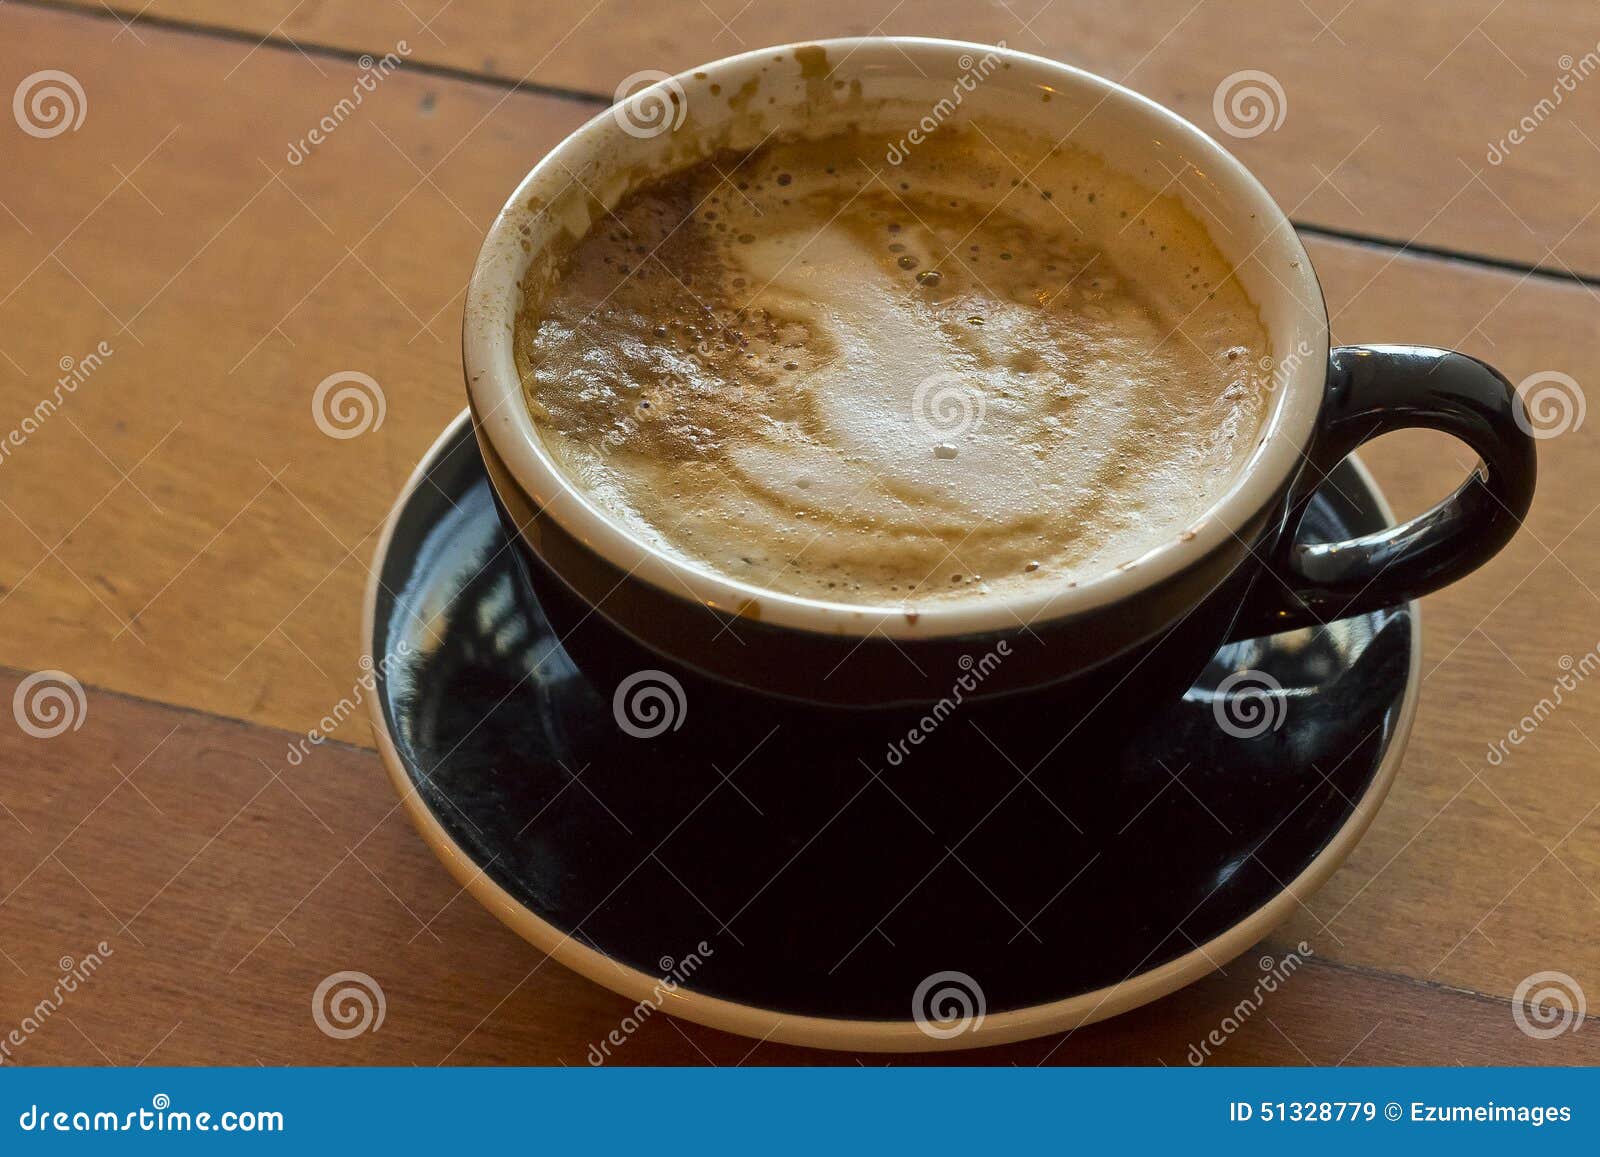 morning hot latte